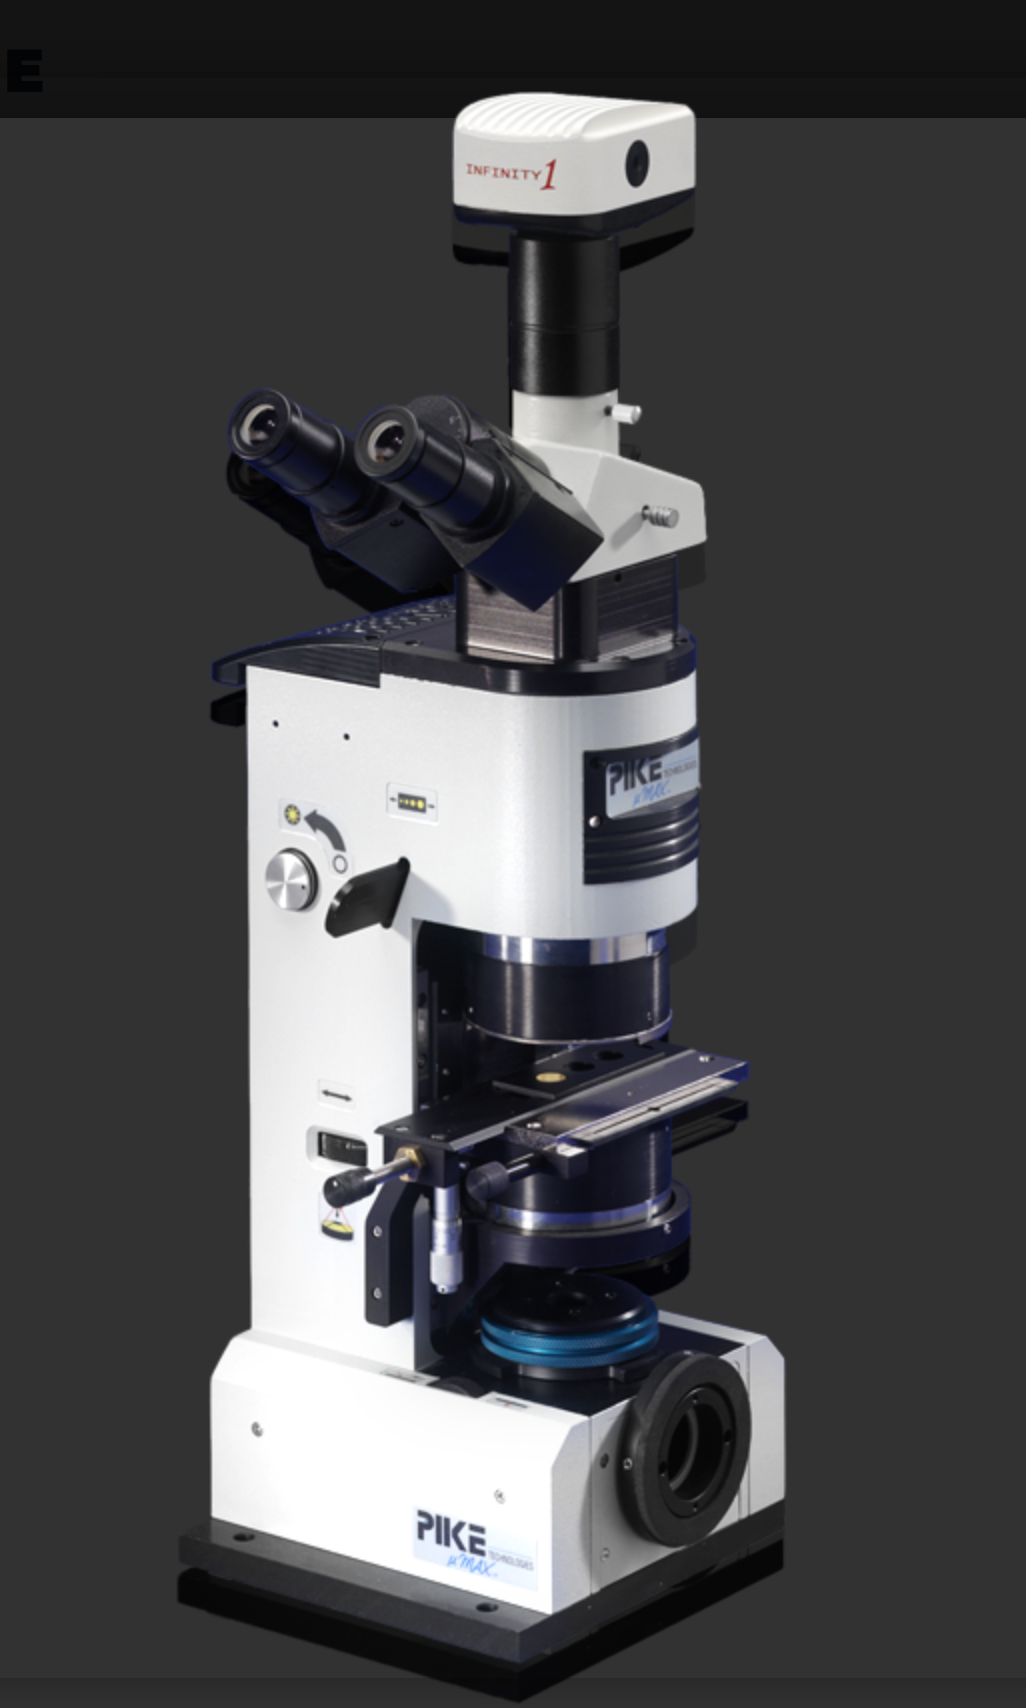 Pike uMax Microscope